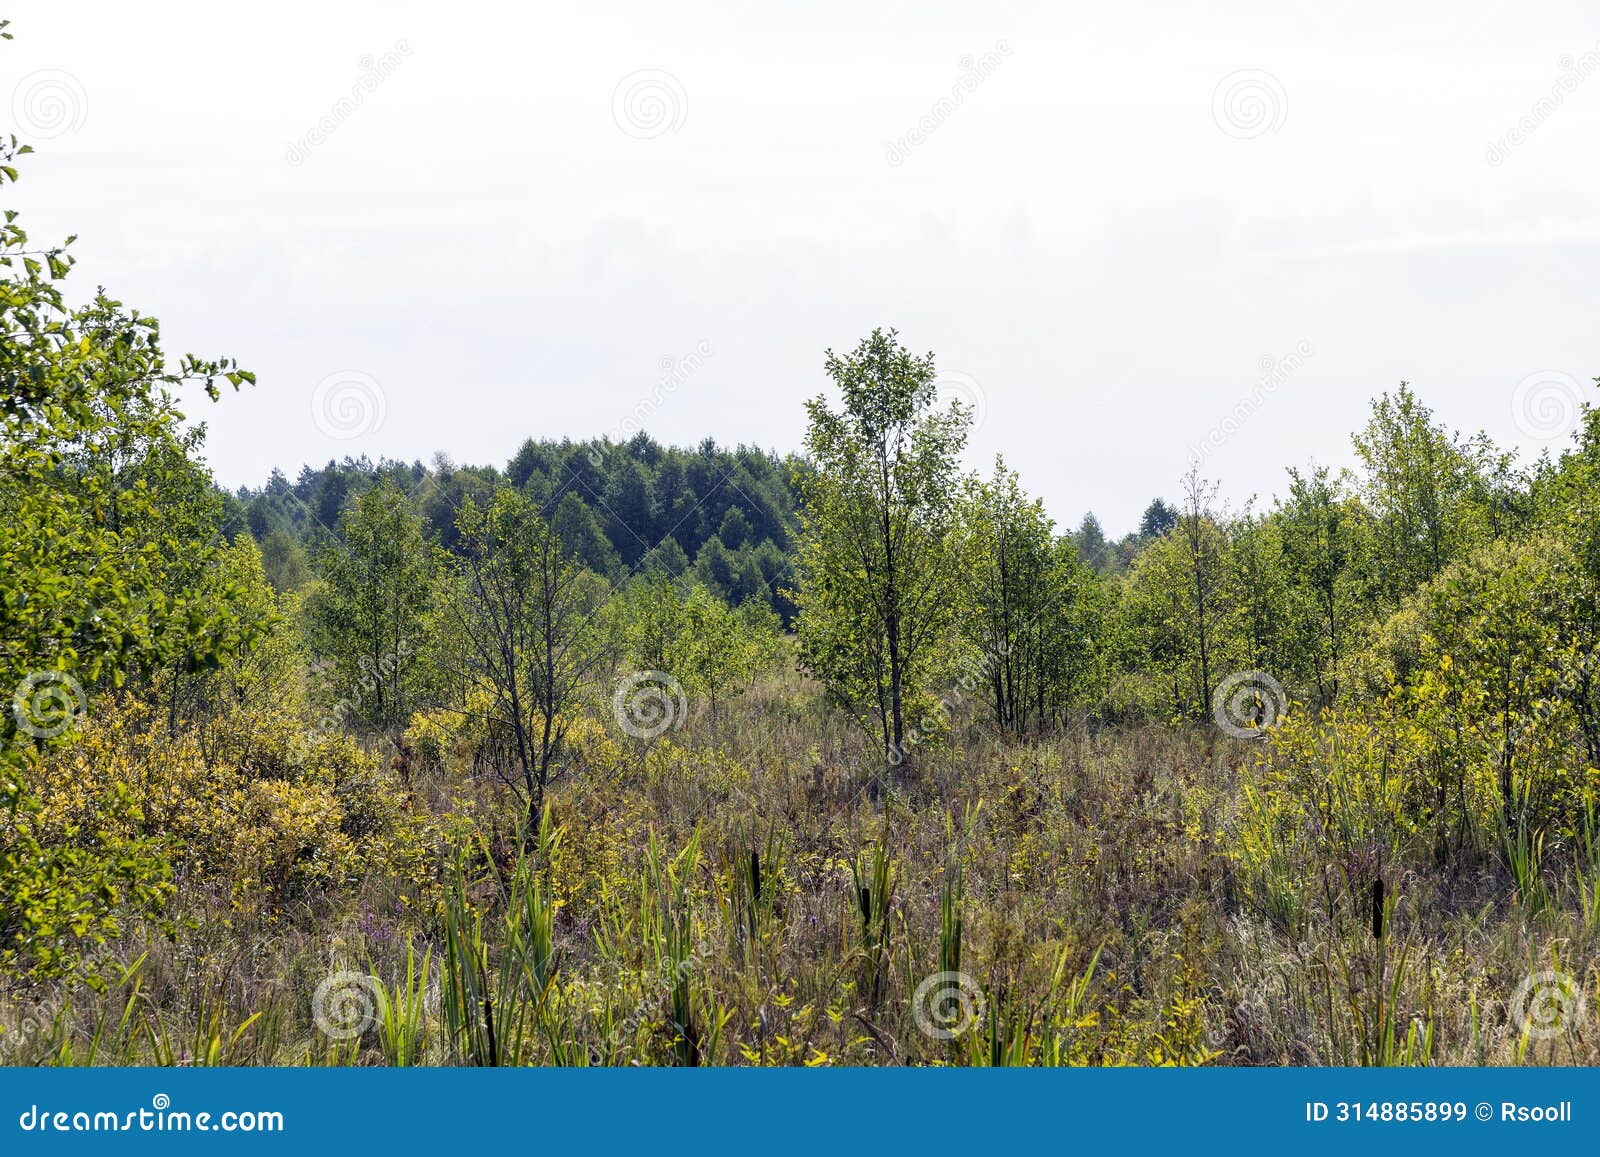 swampy terrain with plants in summer